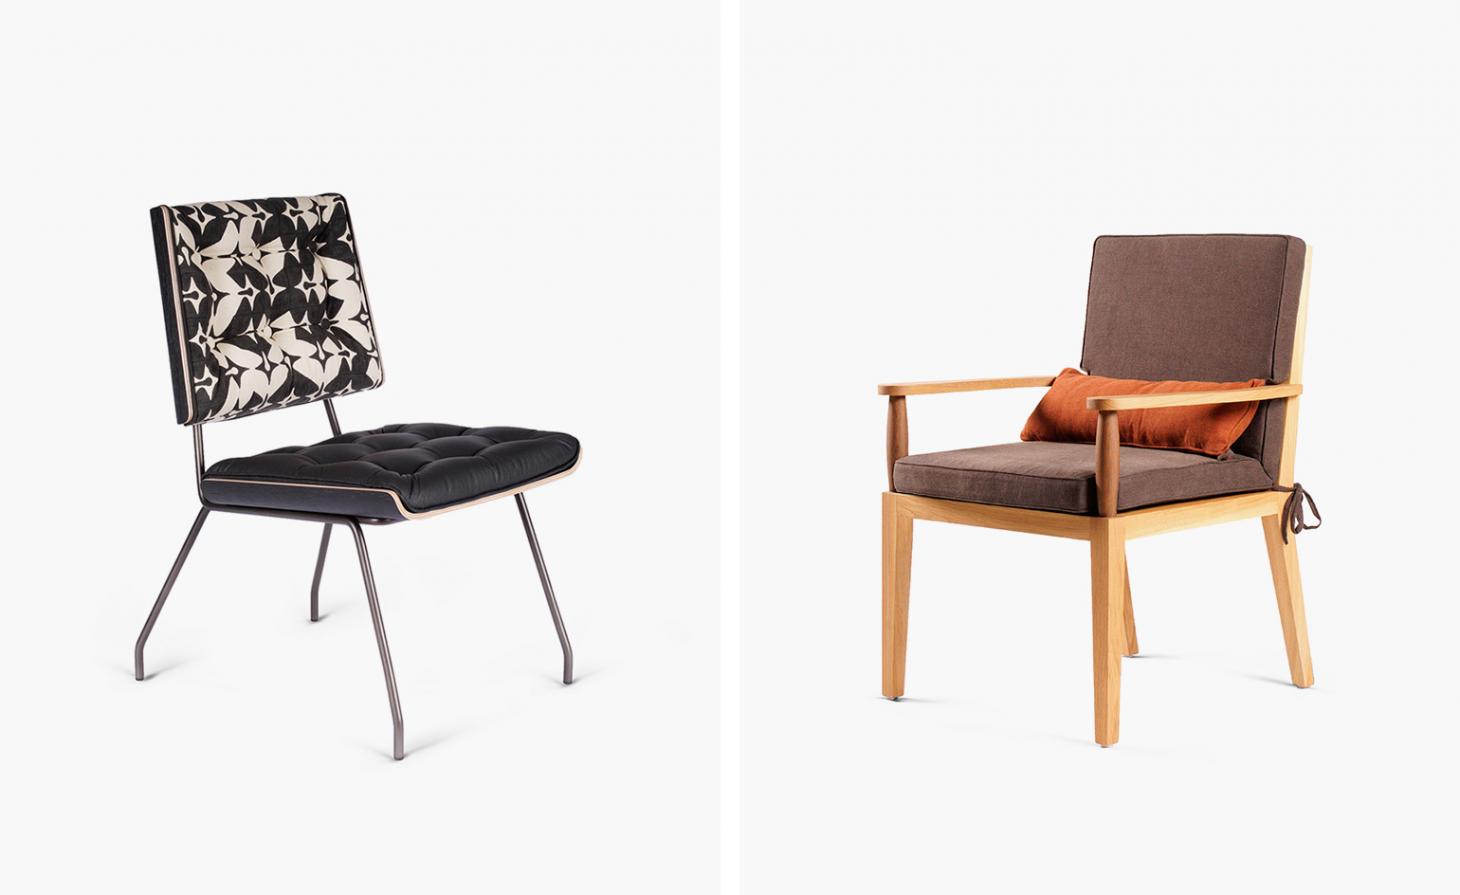 woha debut furniture collection maison et objet-12